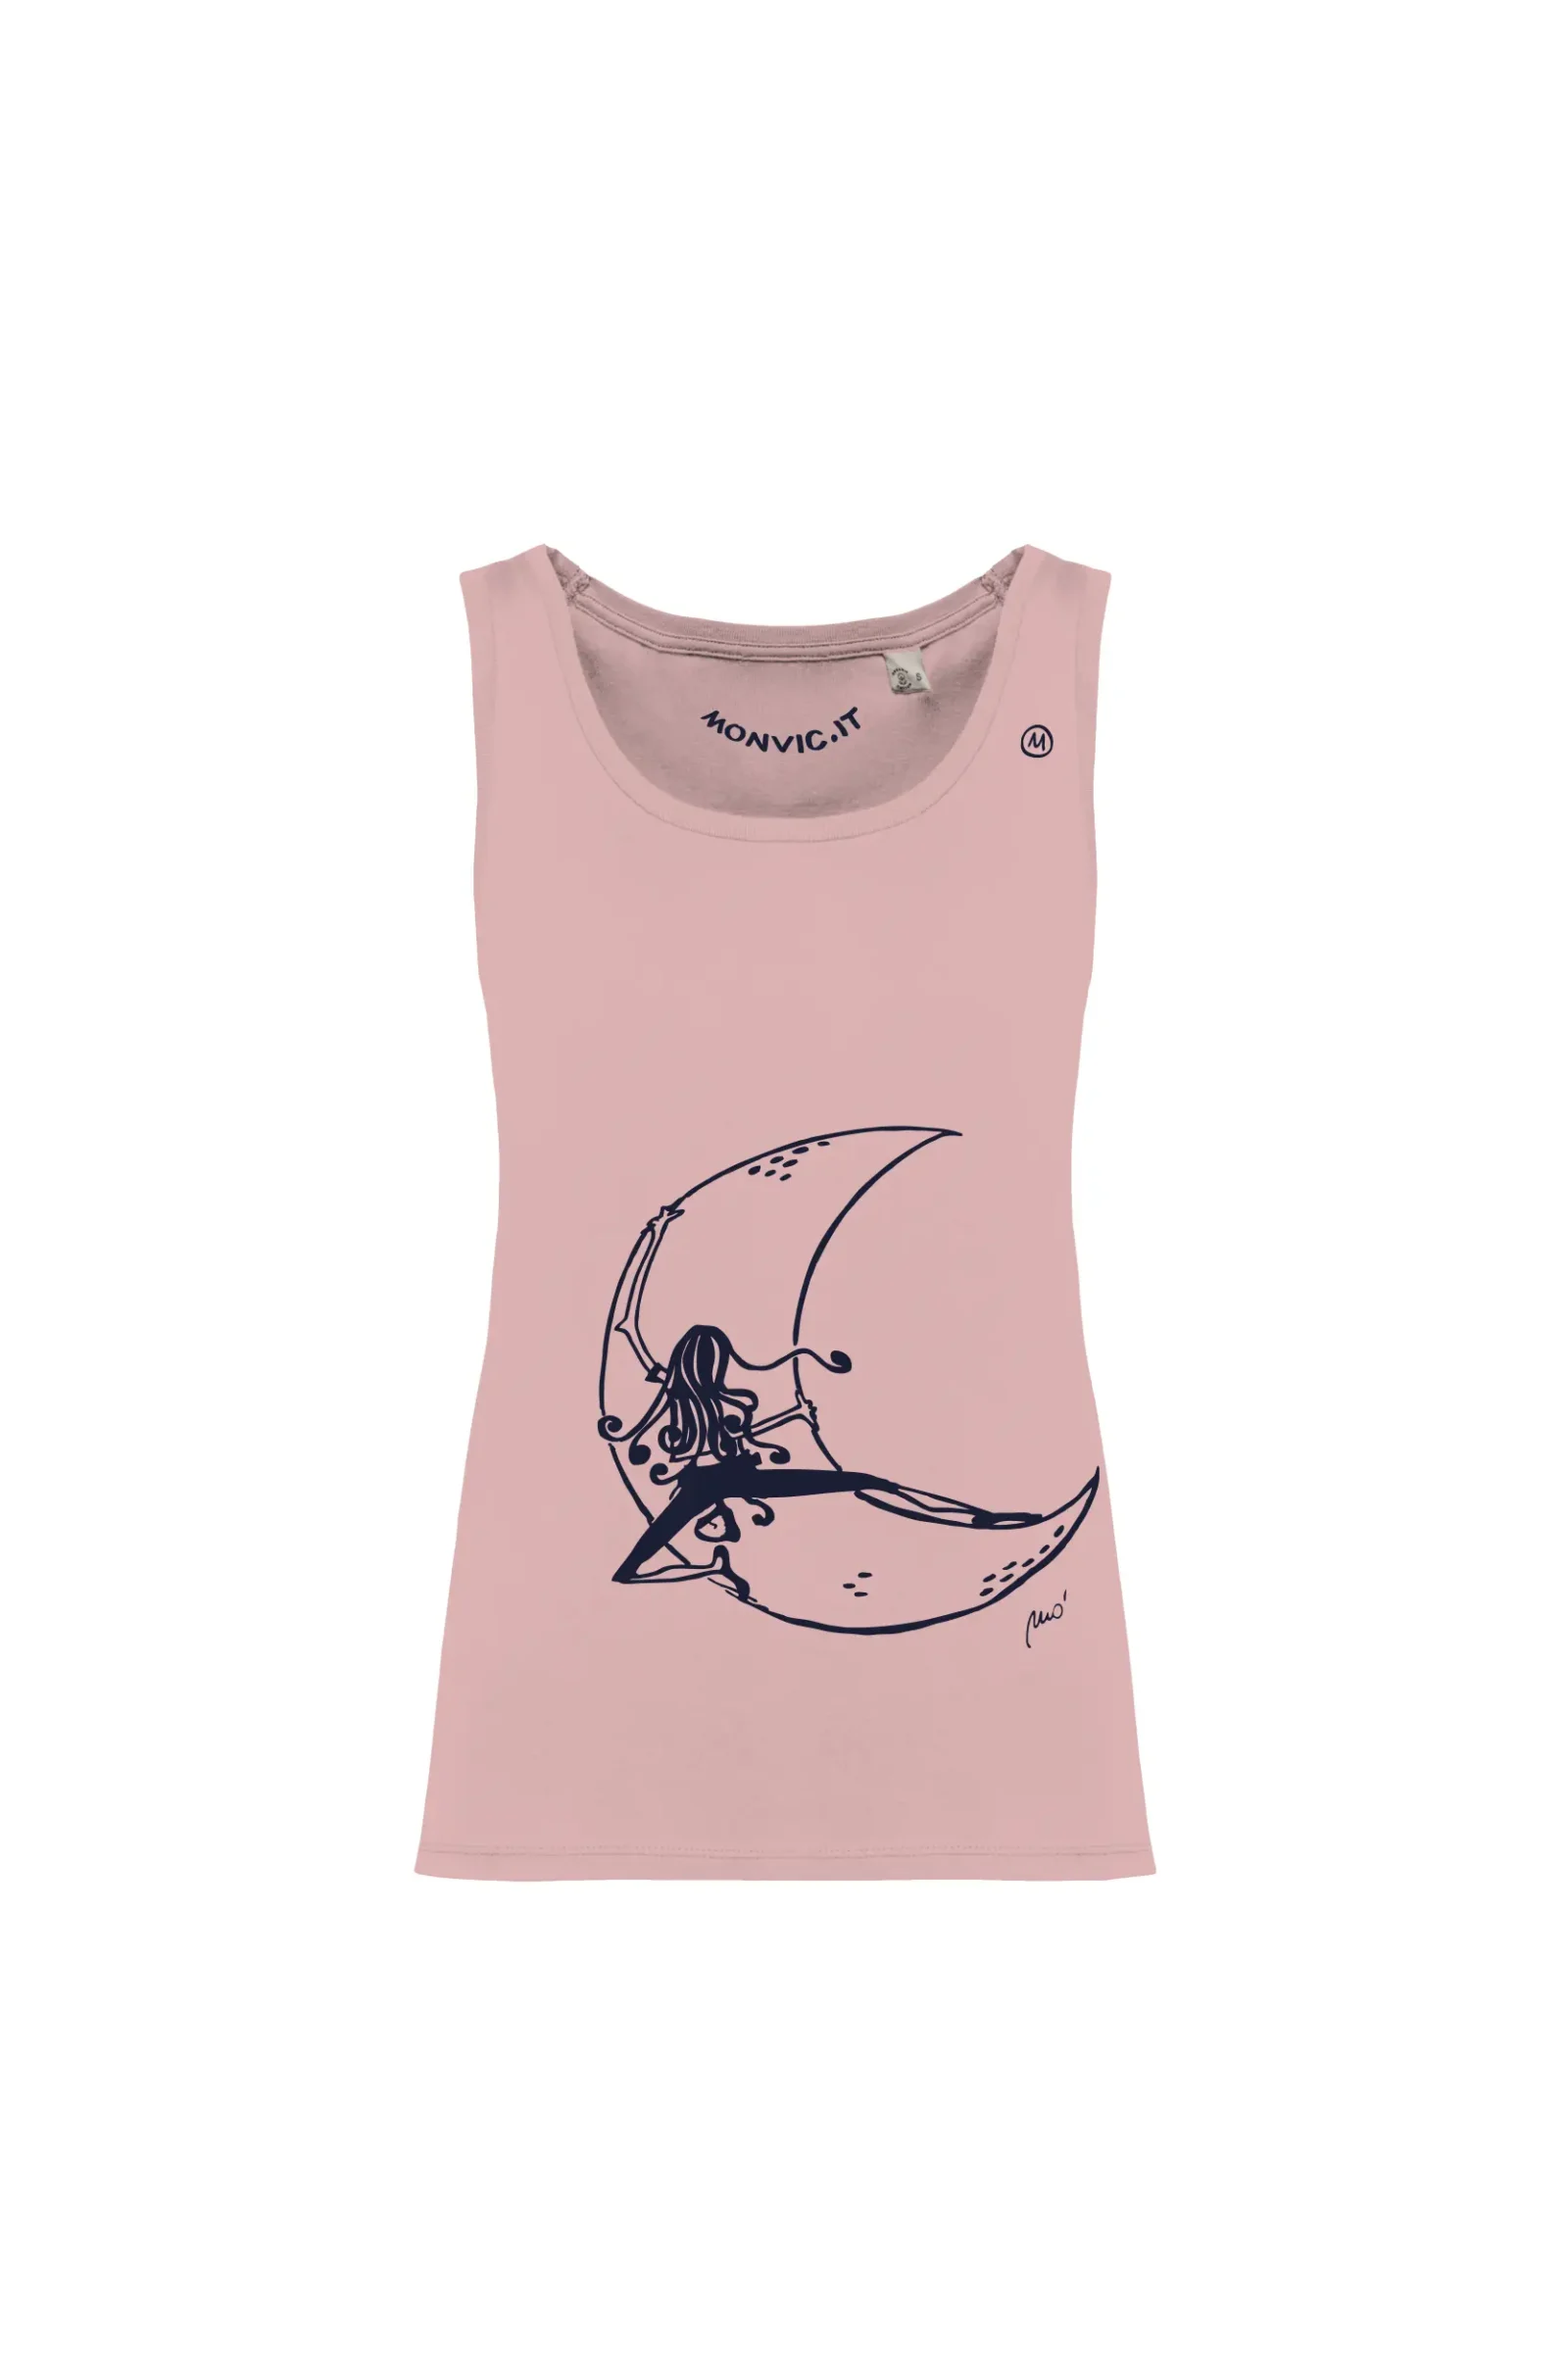 Women's climbing top - pink organic cotton - "Moon" graphics - KOKO ORGANIC by MONVIC